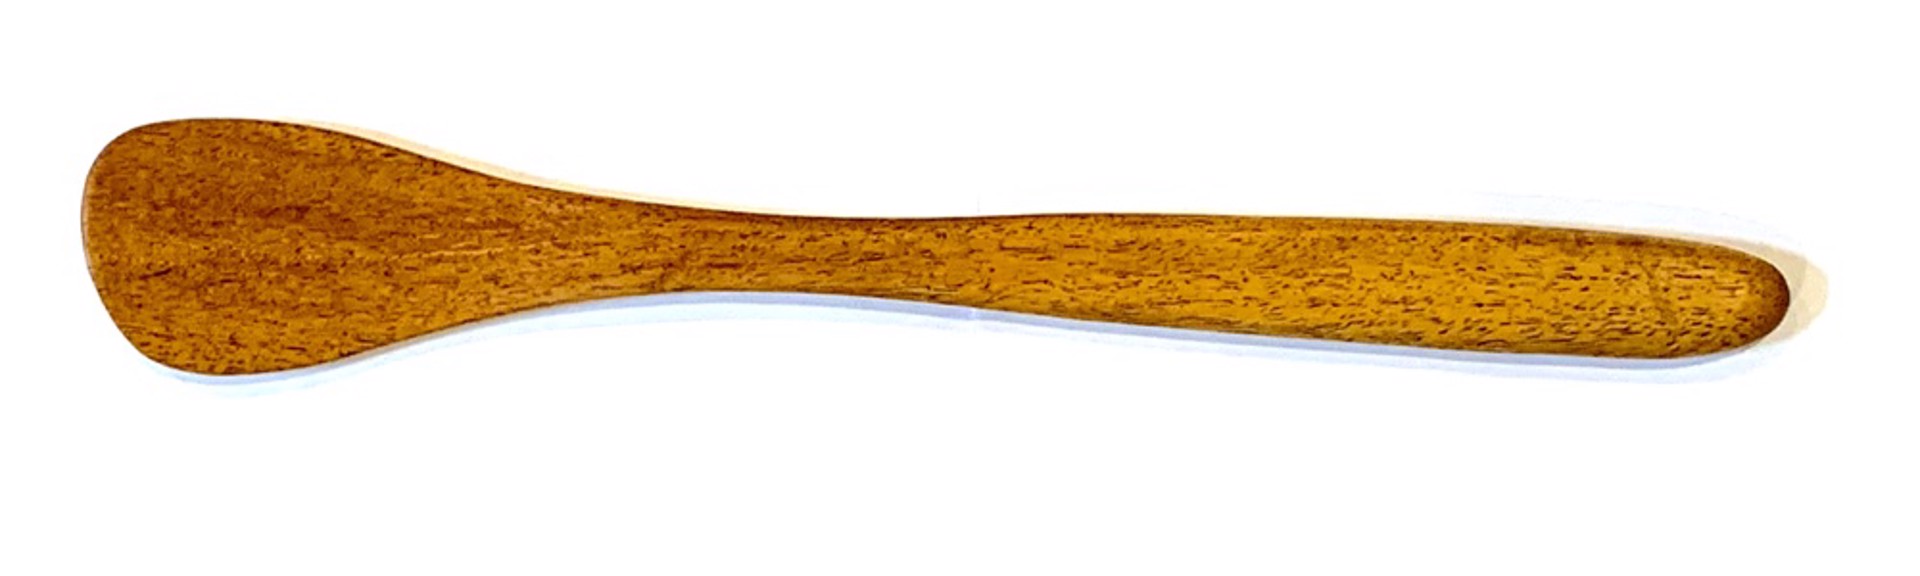 Utensil - Saute Spoon by TreeStump Woodcraft